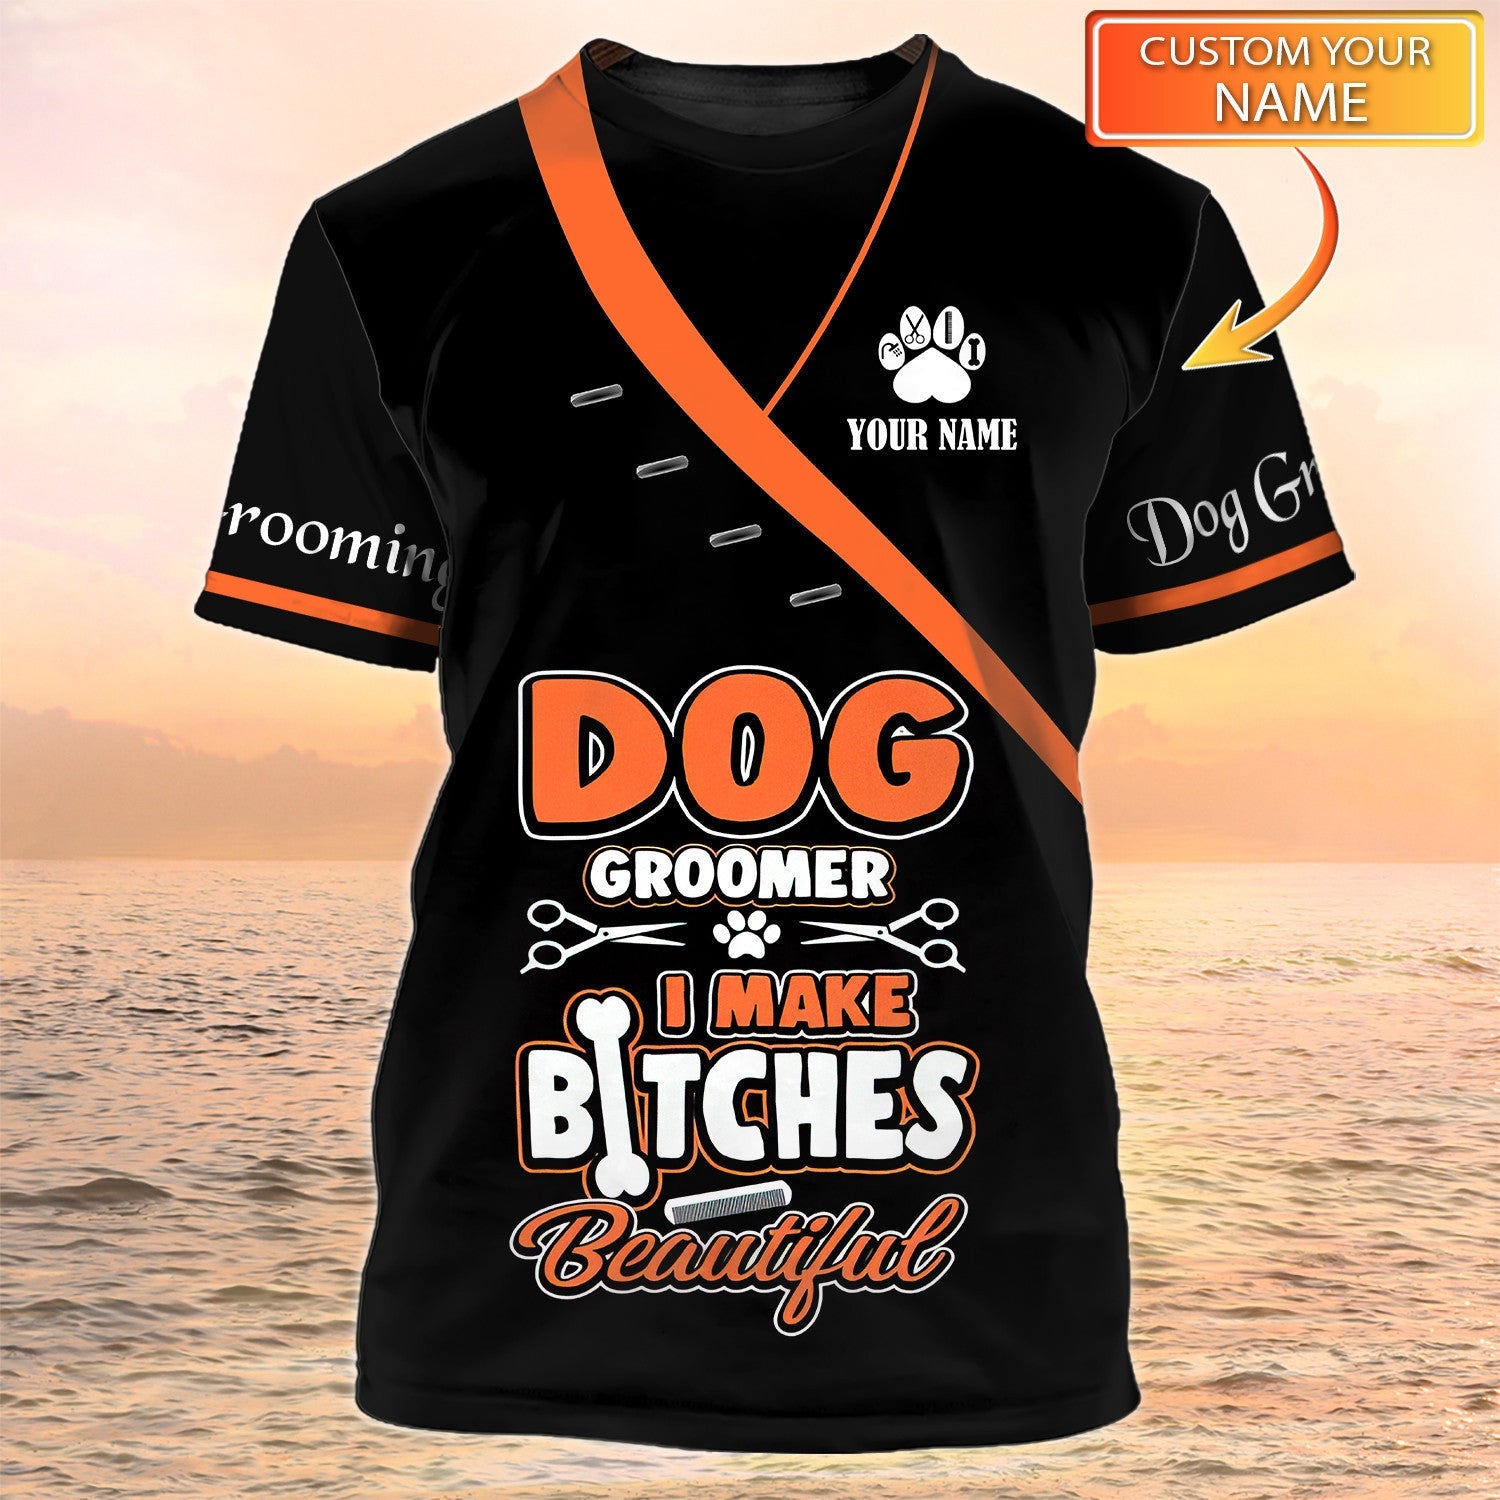 Dog Groomer Shirts I Make Bitches Beautiful Pet Groomer Uniform Salon Pet Personalized Name 3D Tshirt Black